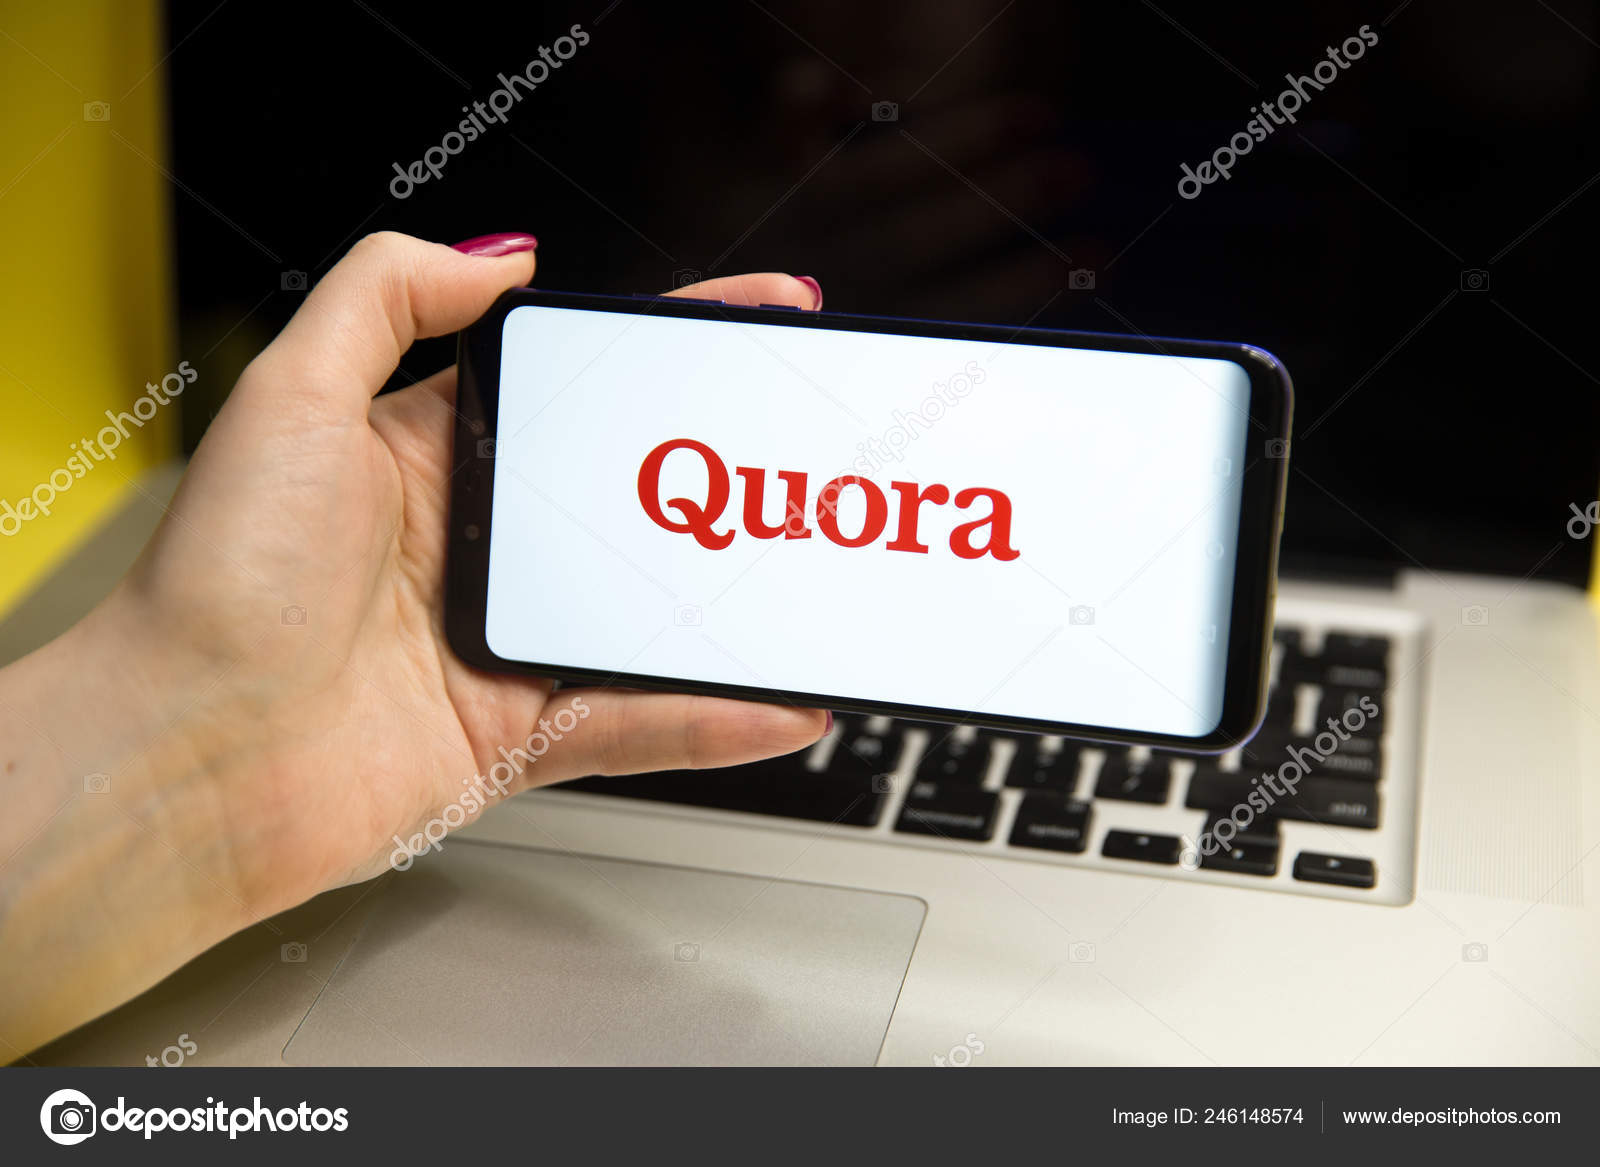 Tula, Russia - JANUARY 29, 2019: Quora logo displayed - Stock Editorial Photo © burdun #246148574